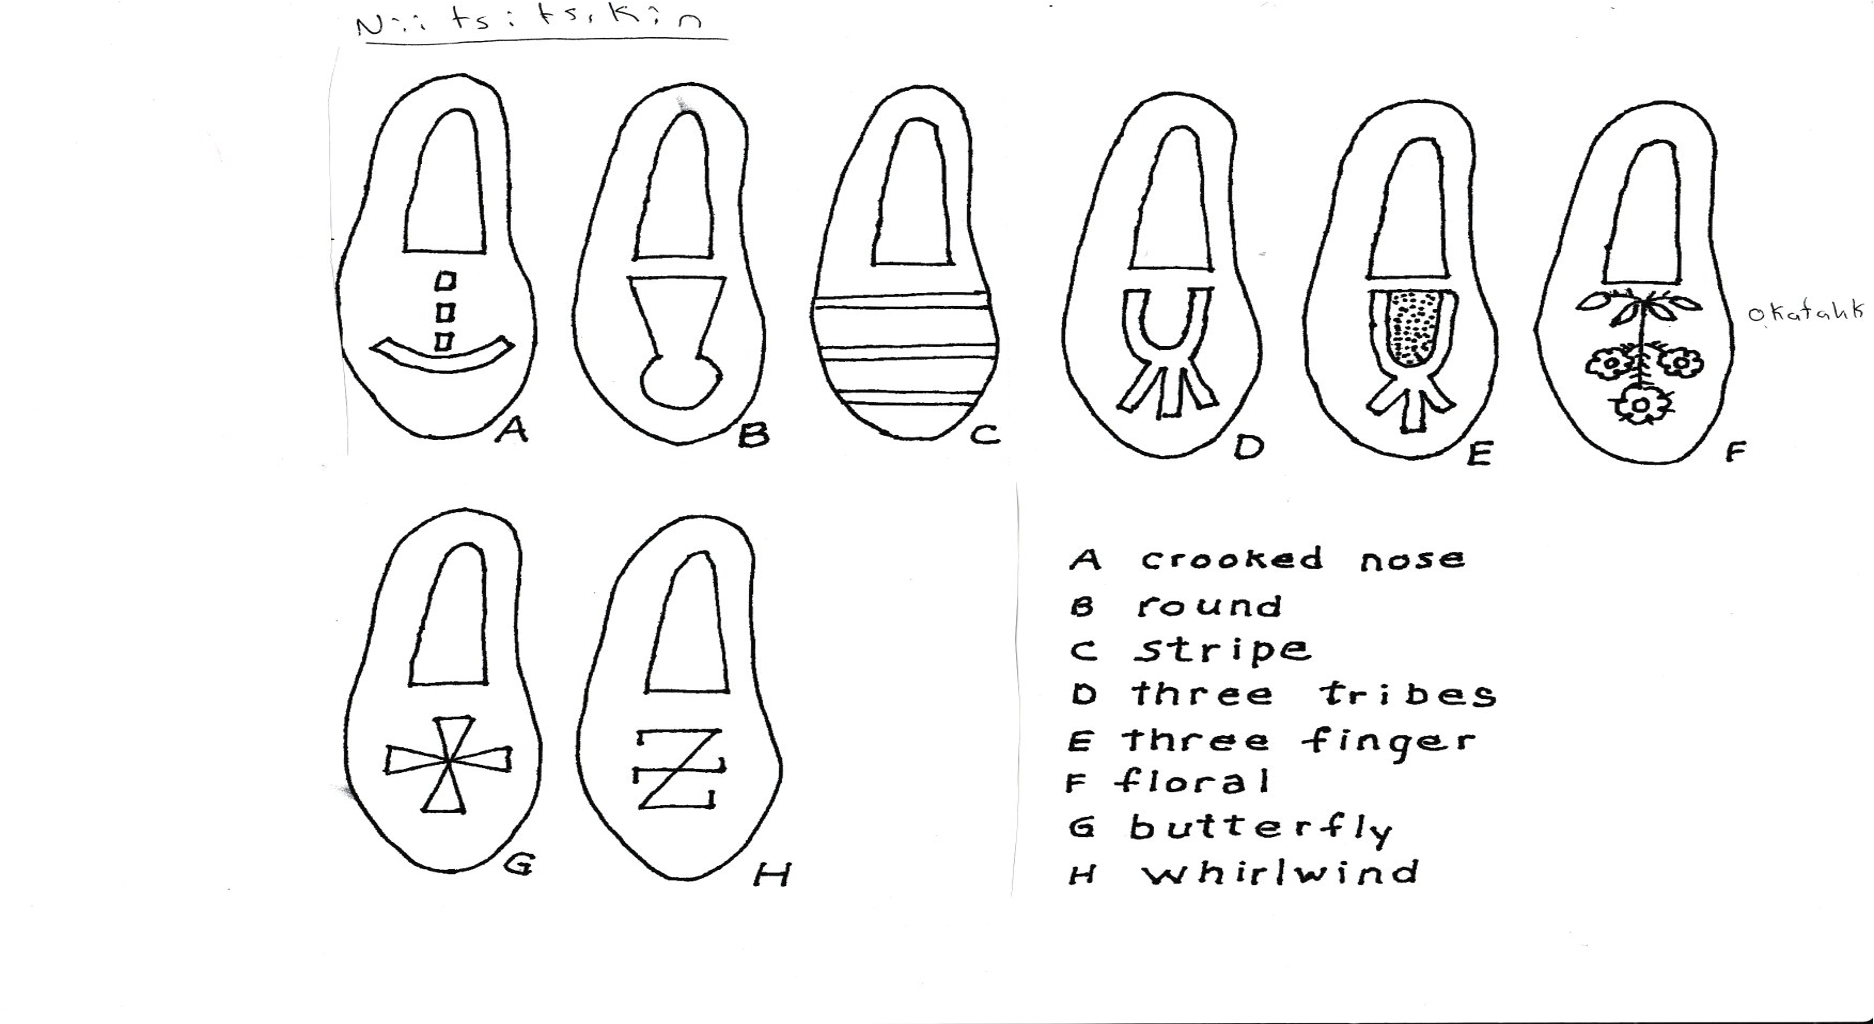 Designs for moccasins.